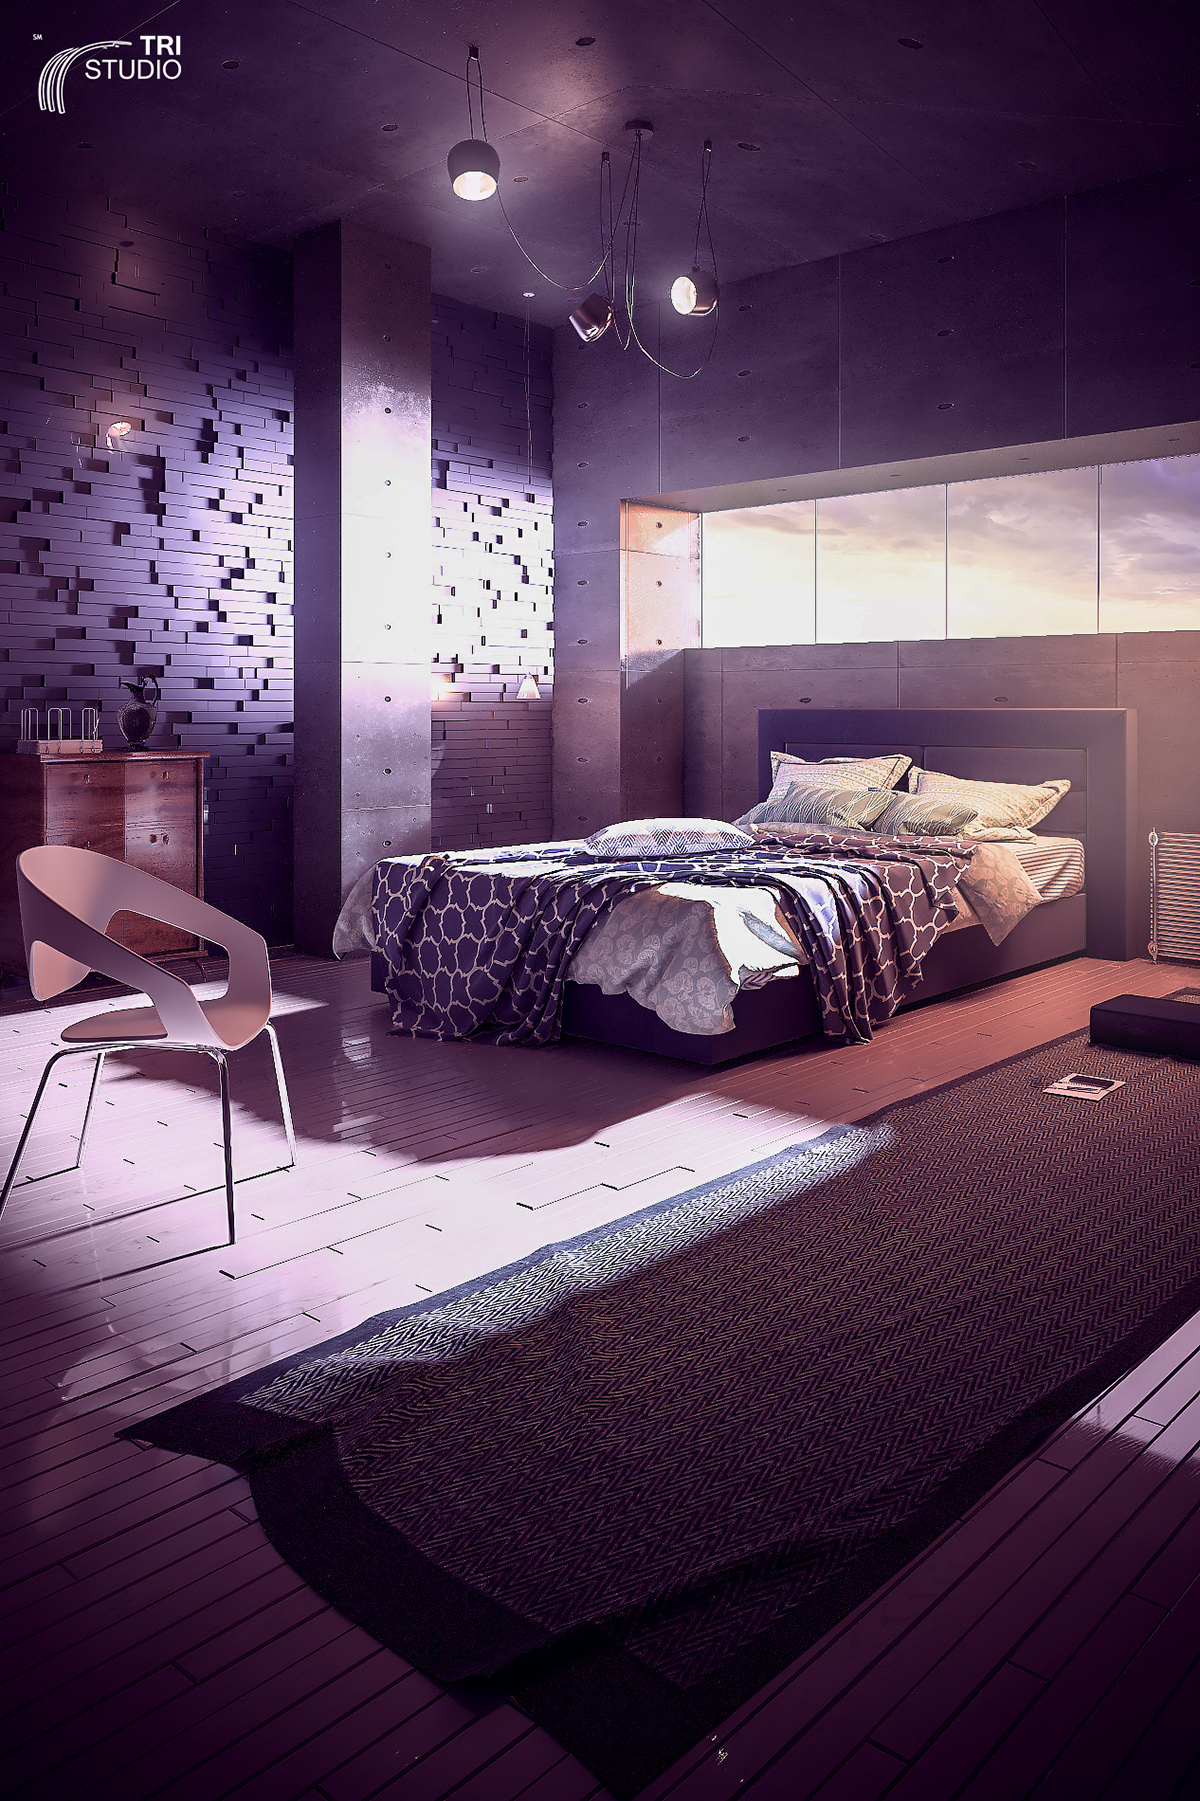 design architechture Interior bed visualize freelancer course room lighting